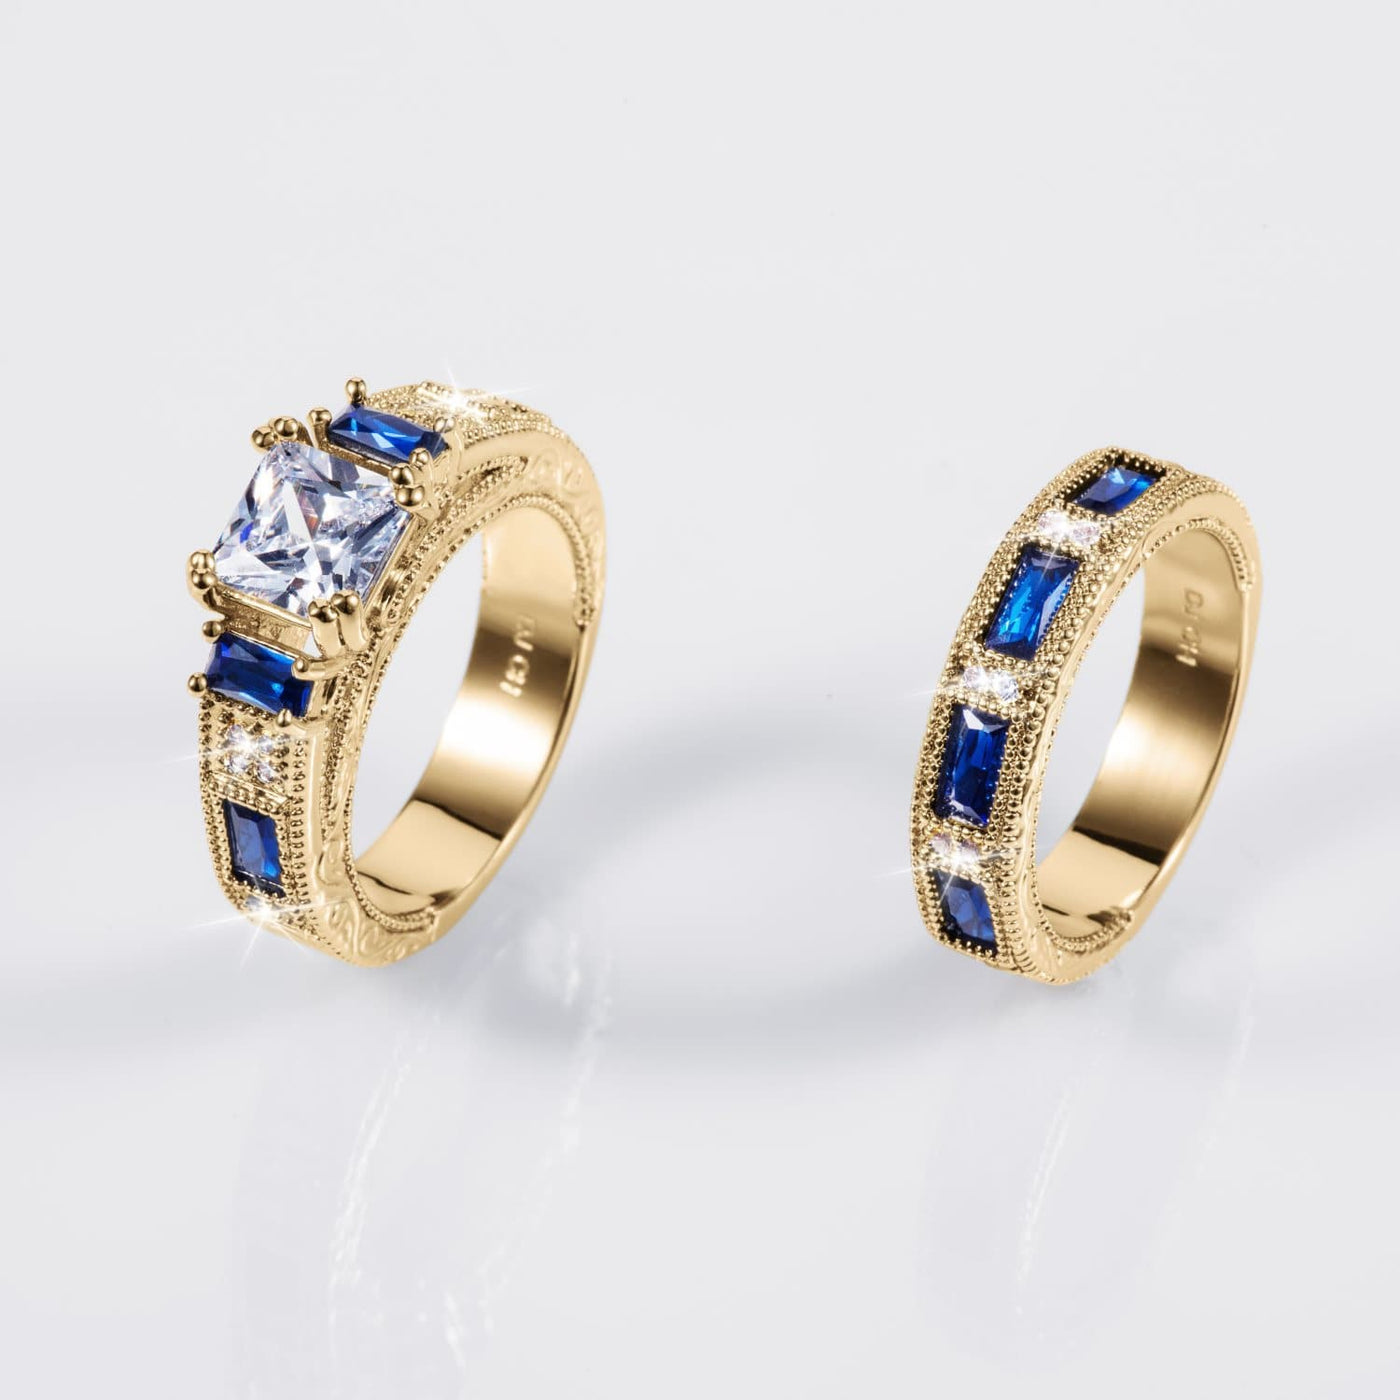 Daniel Steiger Royal Bridal Ring Set